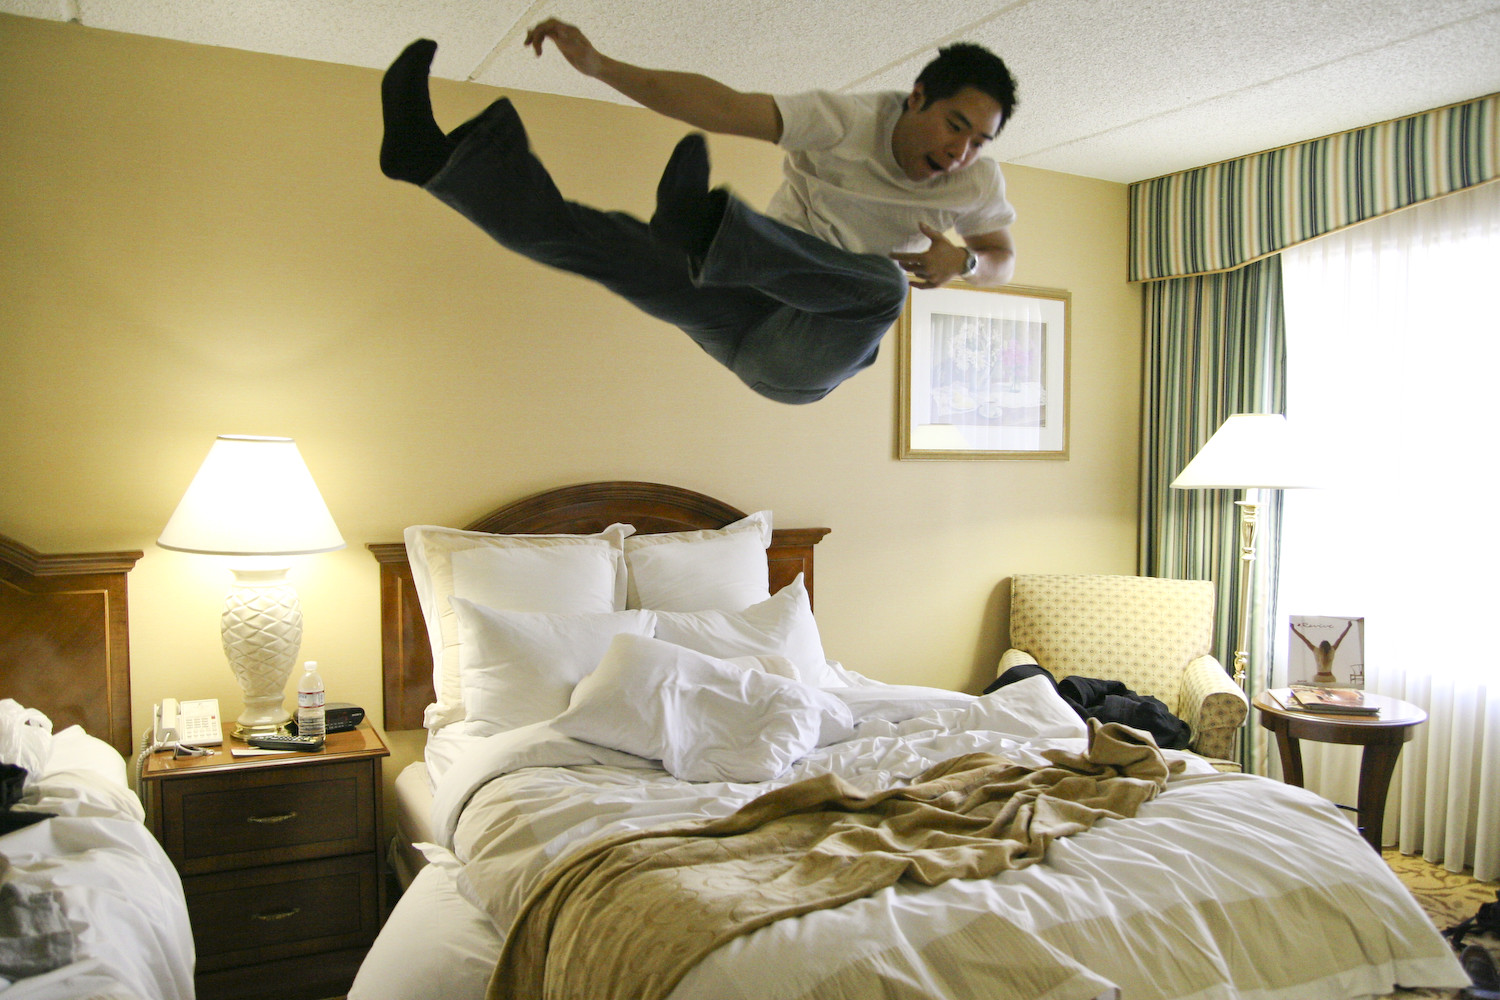 Bed falling. Прыгать на кровати. Человек прыгает на кровати. Прыгать на кровати в отеле. Подпрыгнуть на кровати.